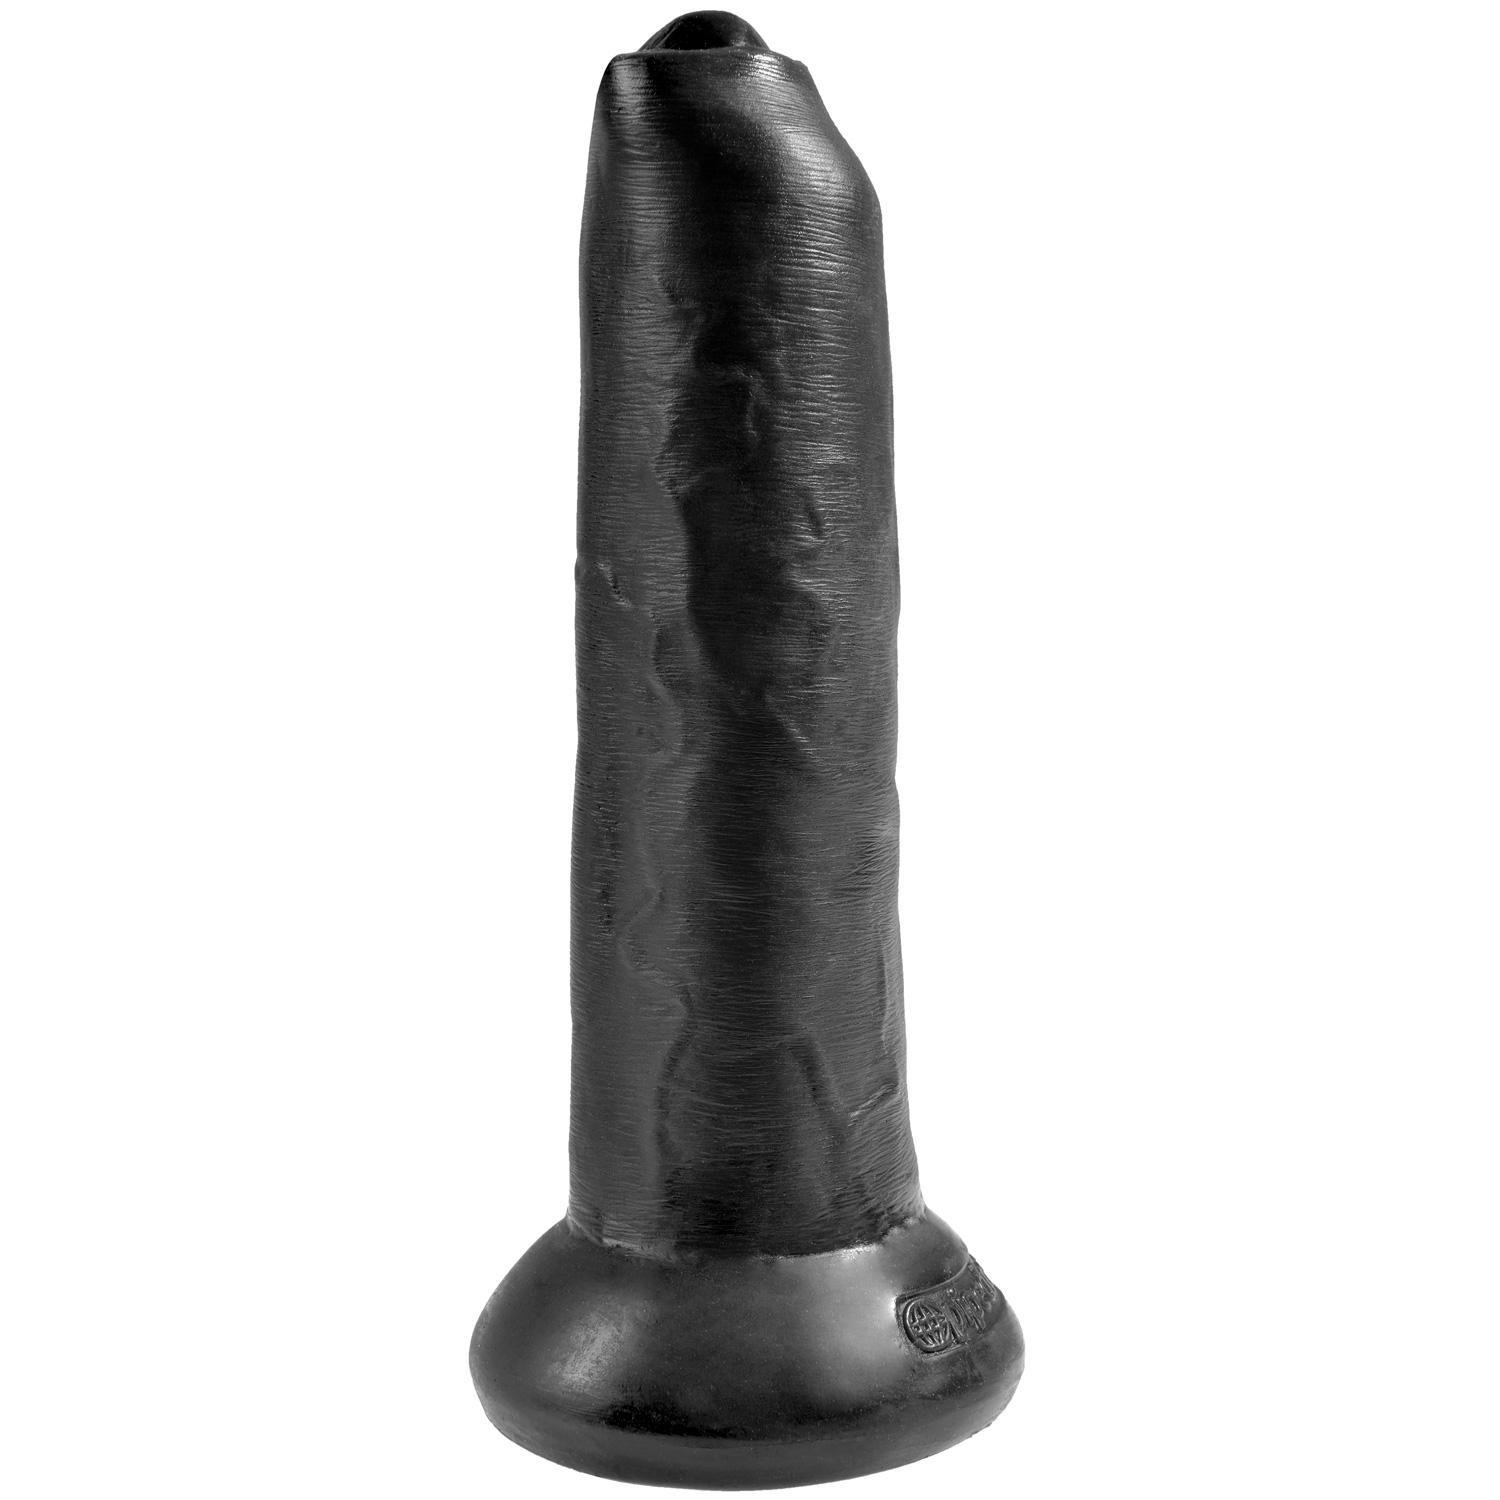 King Penis King Penis Uncut Realistisk Dildo 23 cm - Svart